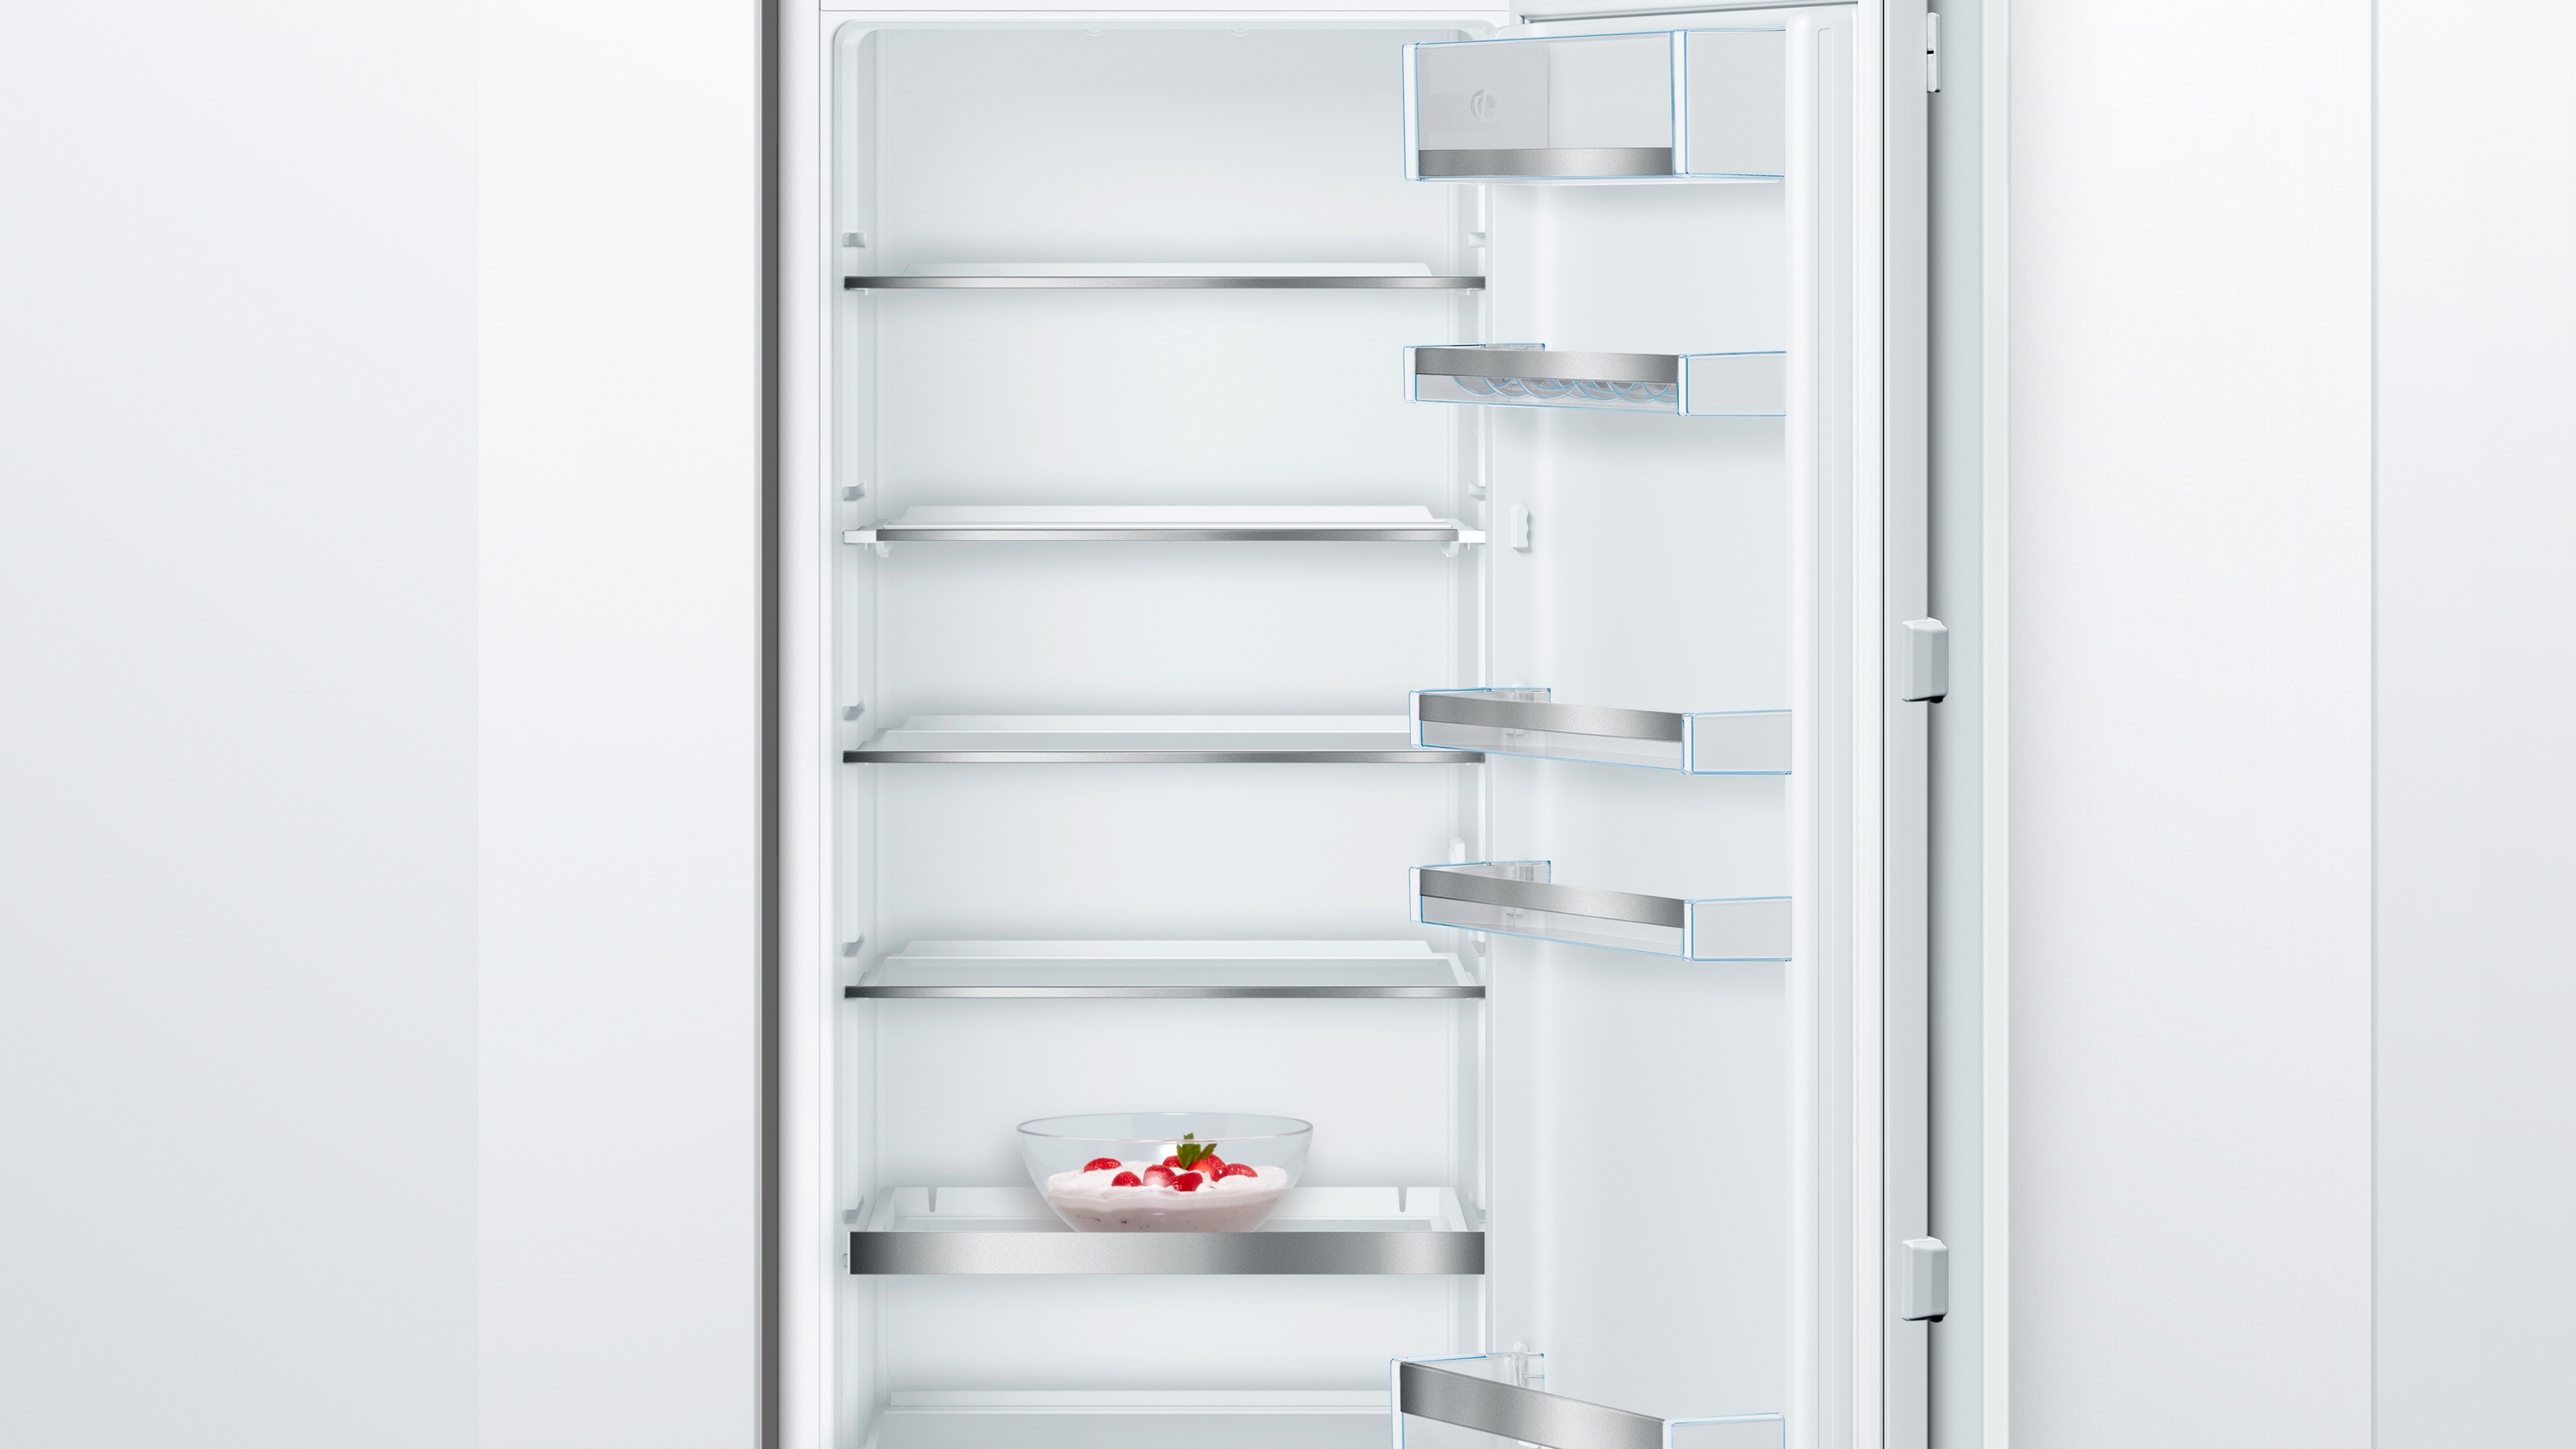 Series 6, built-in fridge, 140 x 56 cm, flat hinge, KIR51AFE0